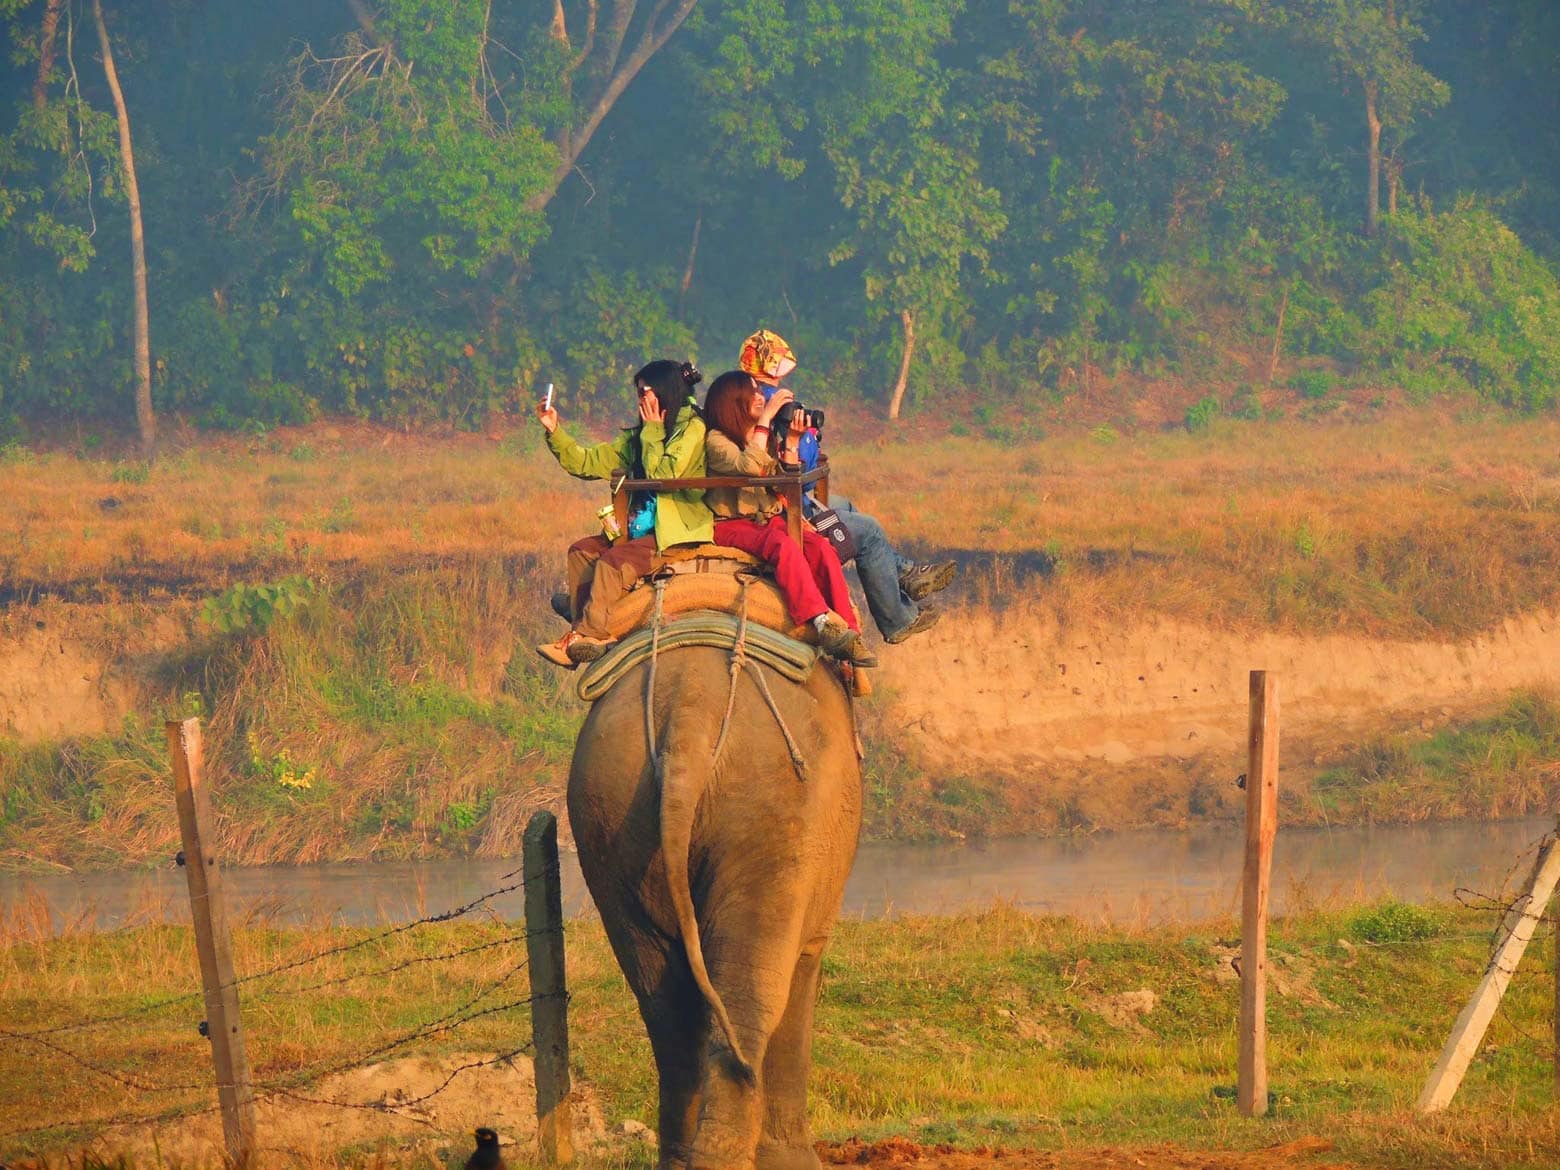 Elephant nature park's project - elephant trails spread awareness against elephant riding